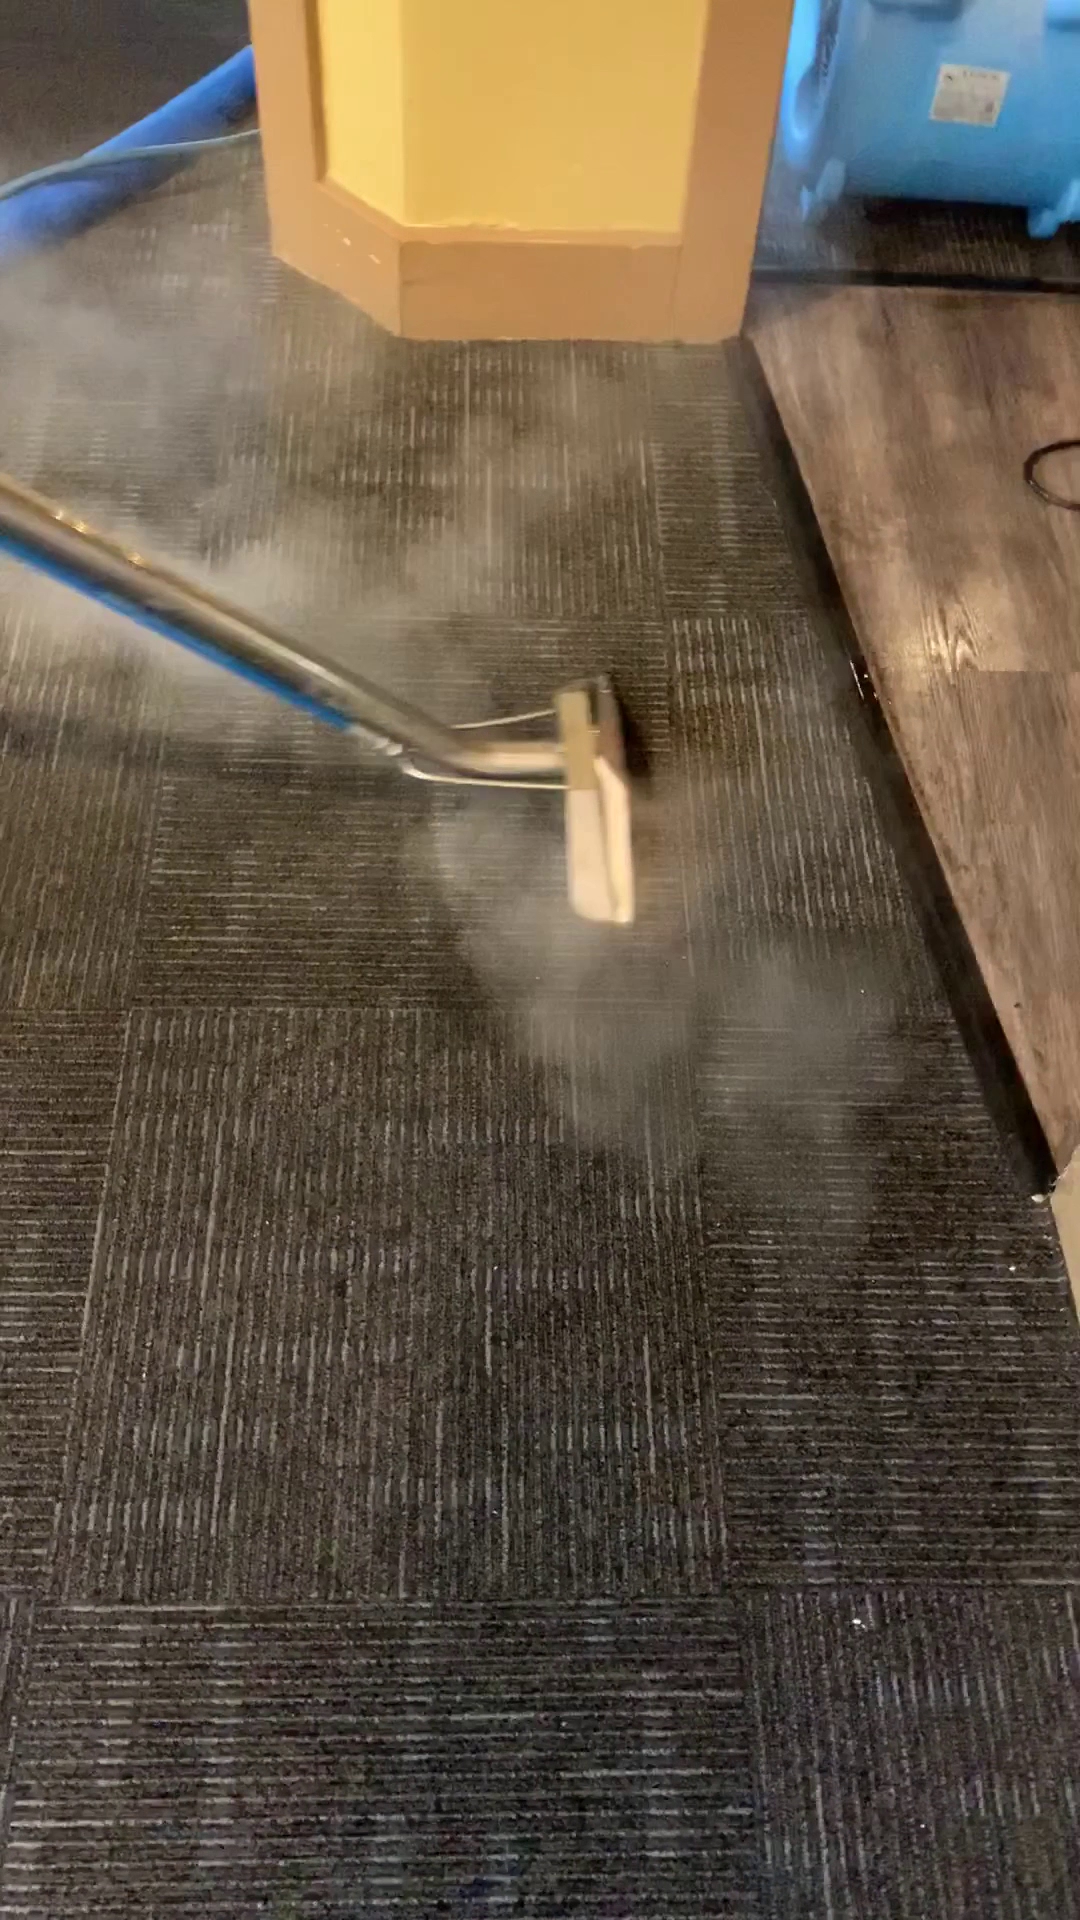 Triple Gem Carpet Cleaning